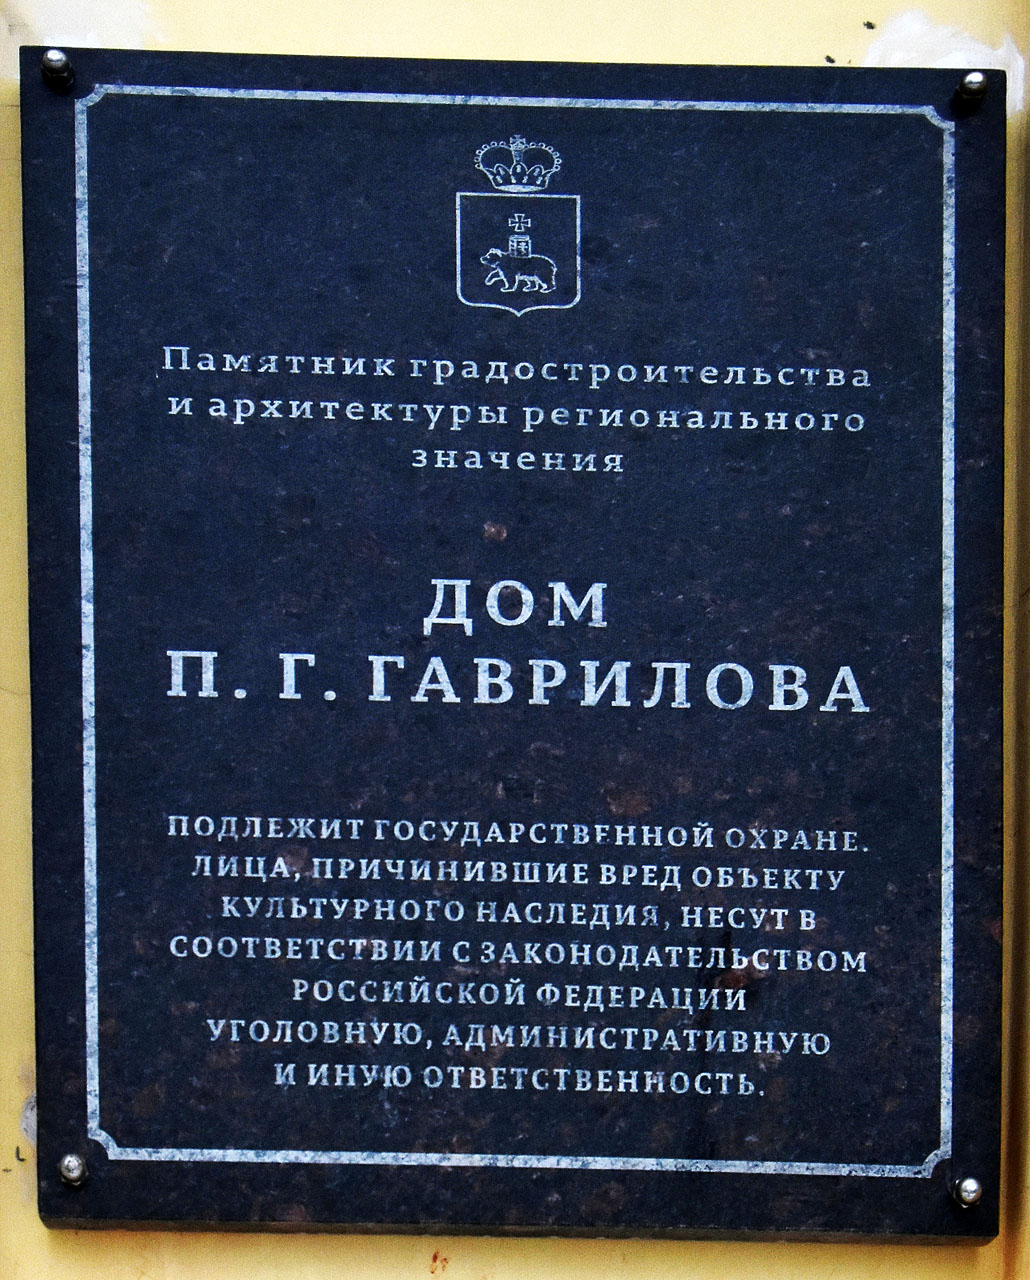 Perm, Улица Ленина, 22. Perm — Memorial plaques